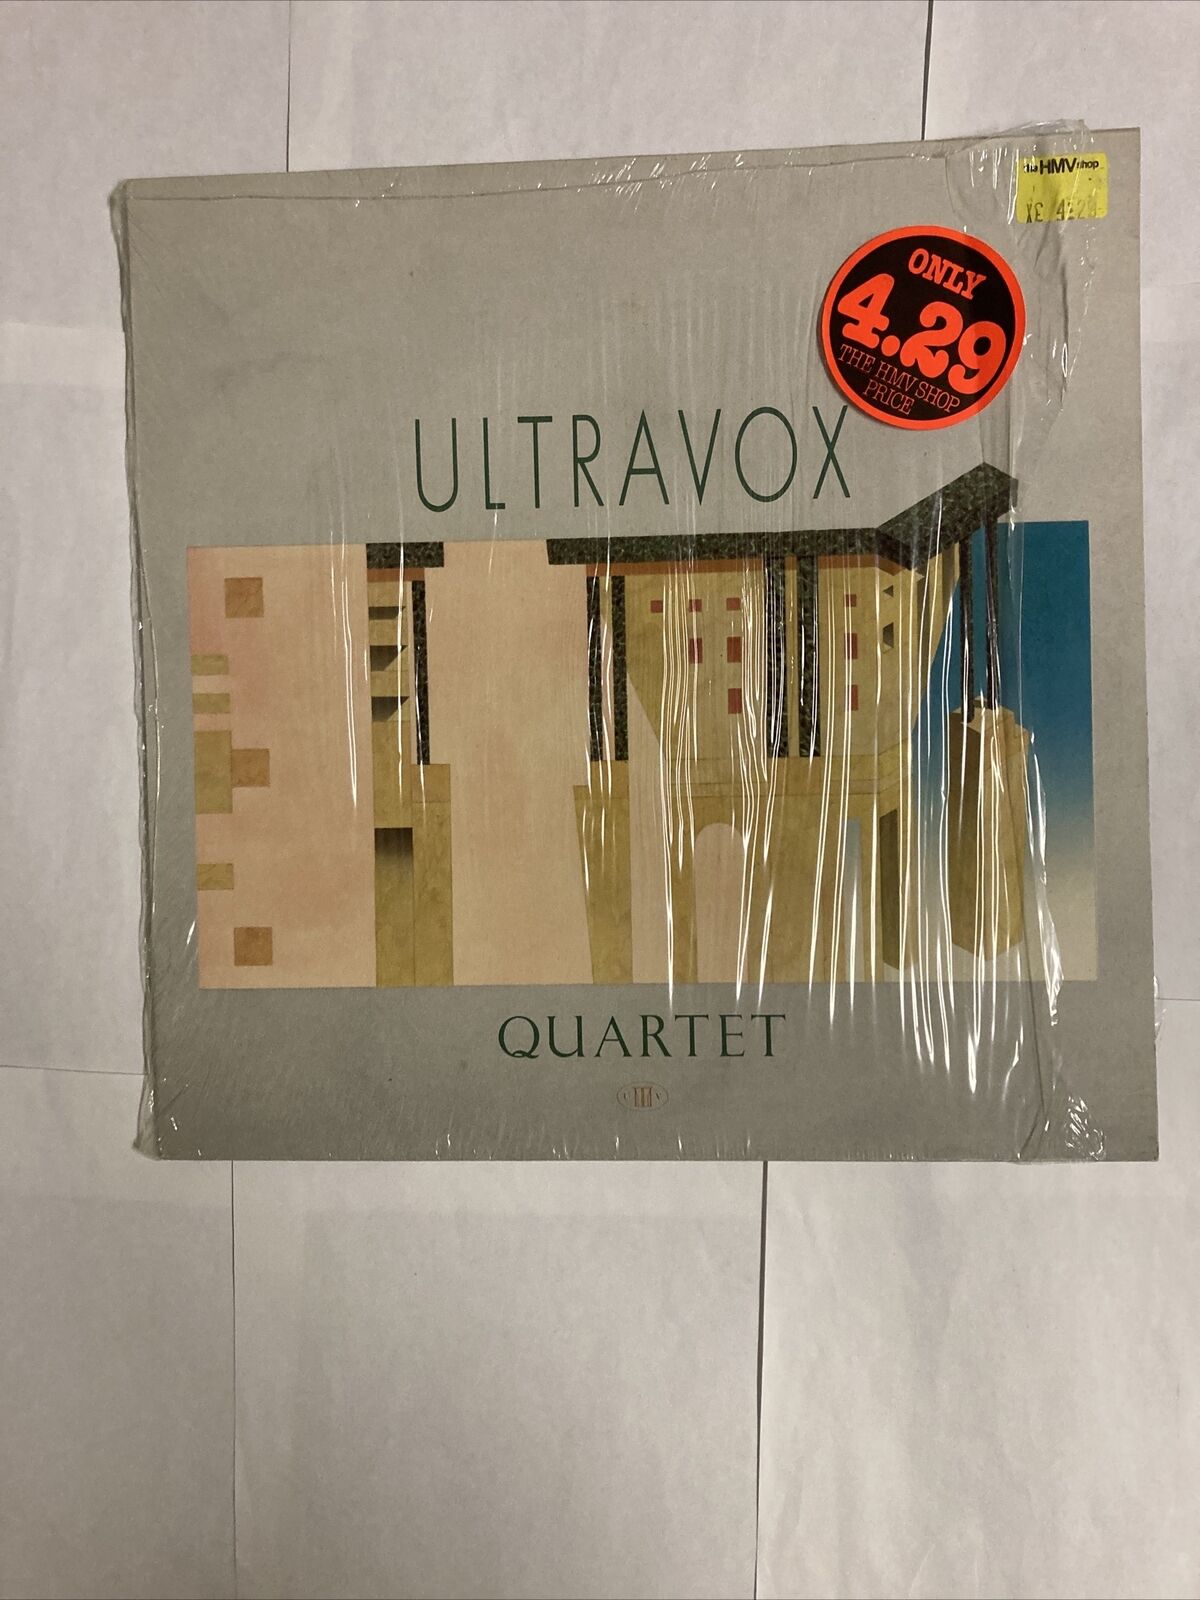 VINTAGE 1982 Ultravox Quartet Vinyl Record Album CDL-1394